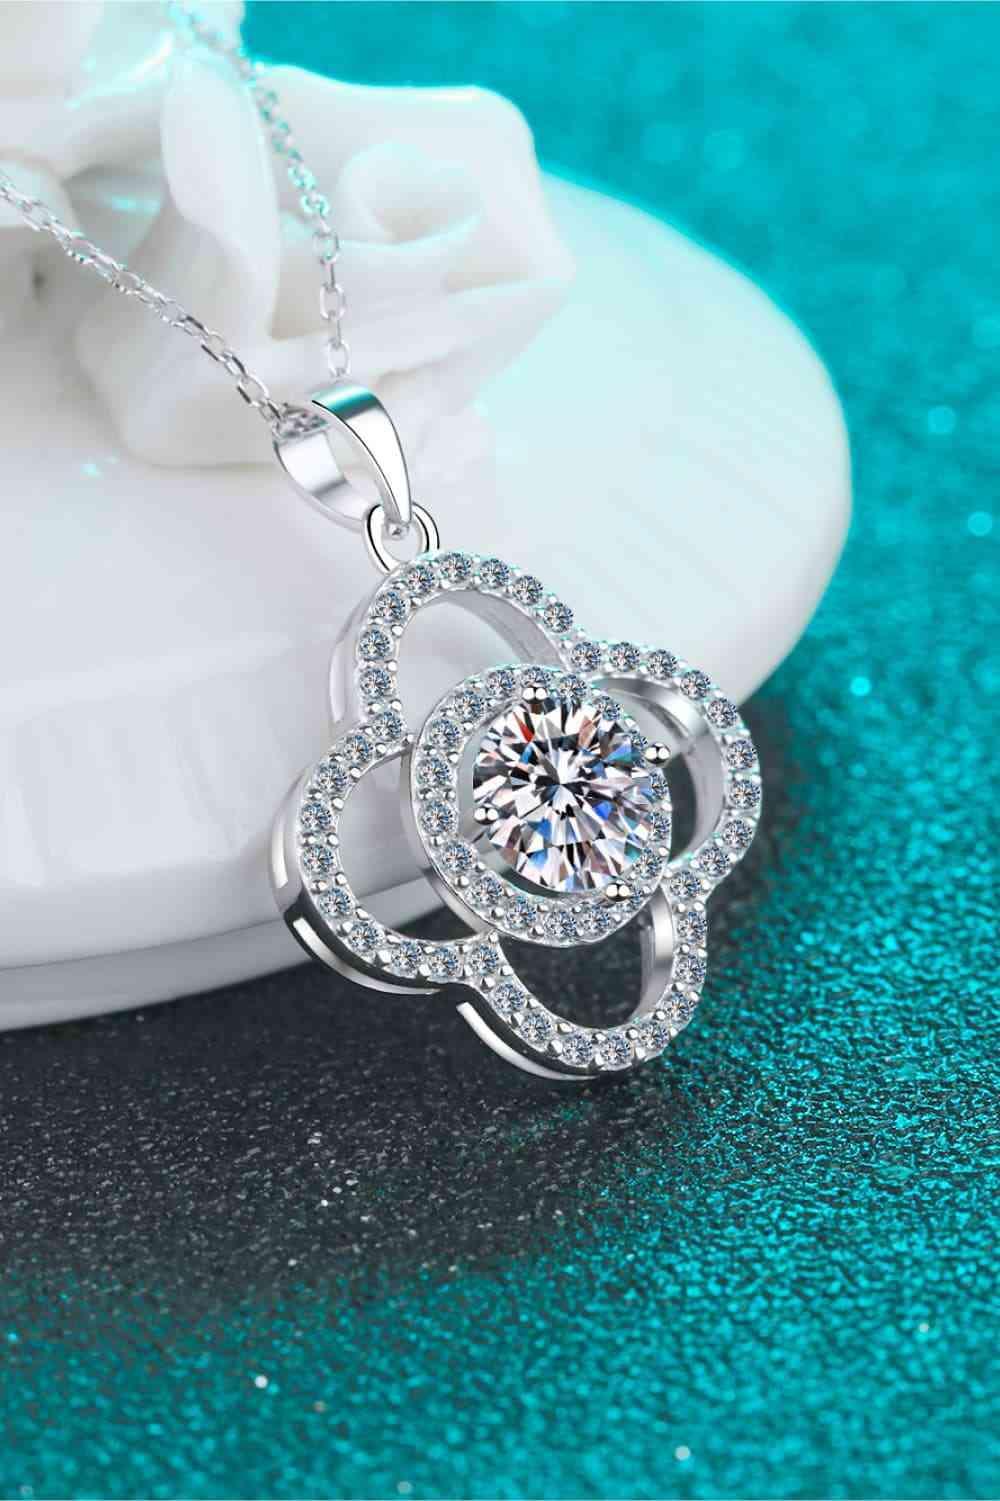 a white diamond necklace on a blue surface